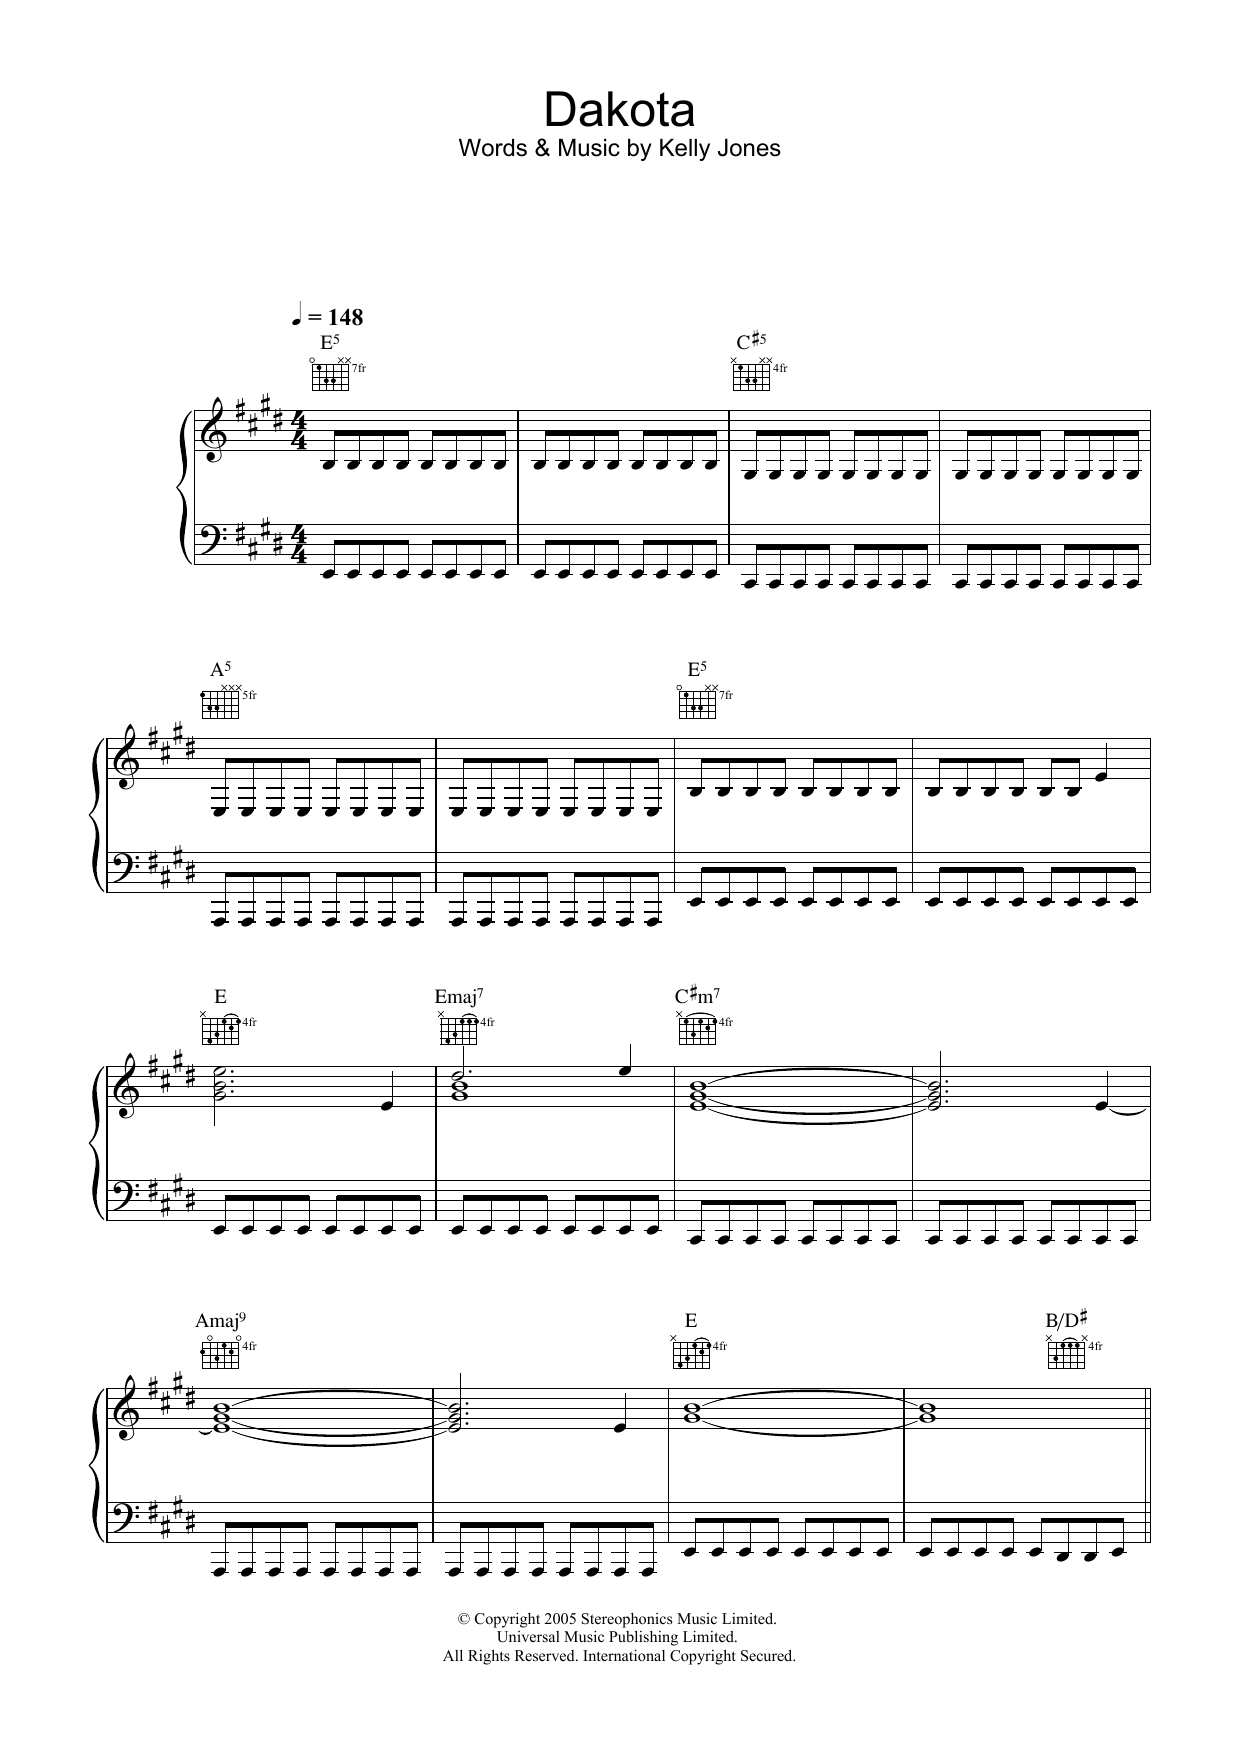 Stereophonics Dakota Sheet Music Notes & Chords for Guitar Tab - Download or Print PDF